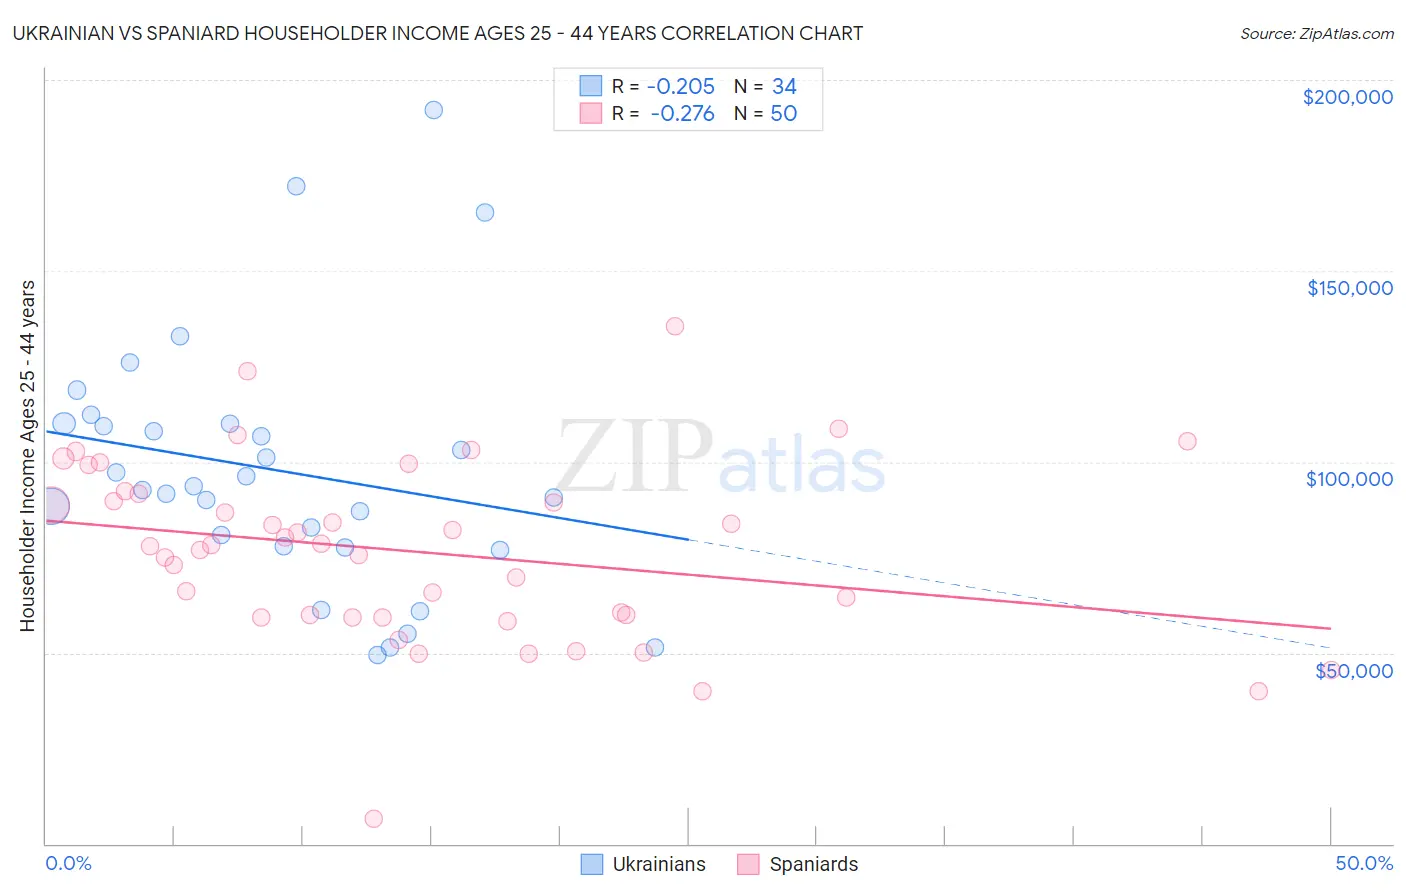 Ukrainian vs Spaniard Householder Income Ages 25 - 44 years